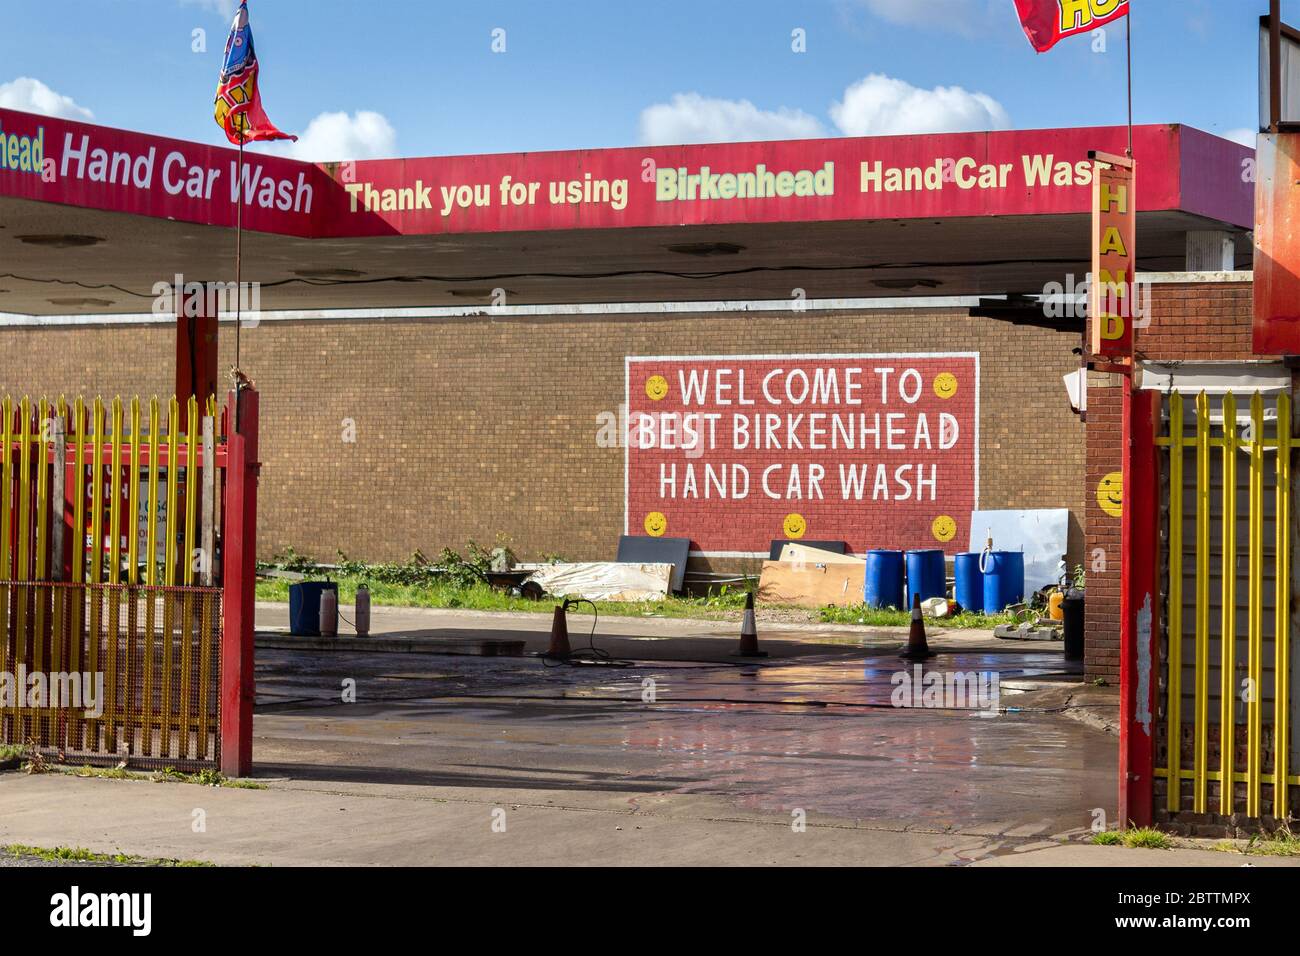 Birkenhead Car Wash, Cleveland Street, Birkenhead. Entrance / exit to hand car wash cleaning service. Stock Photo